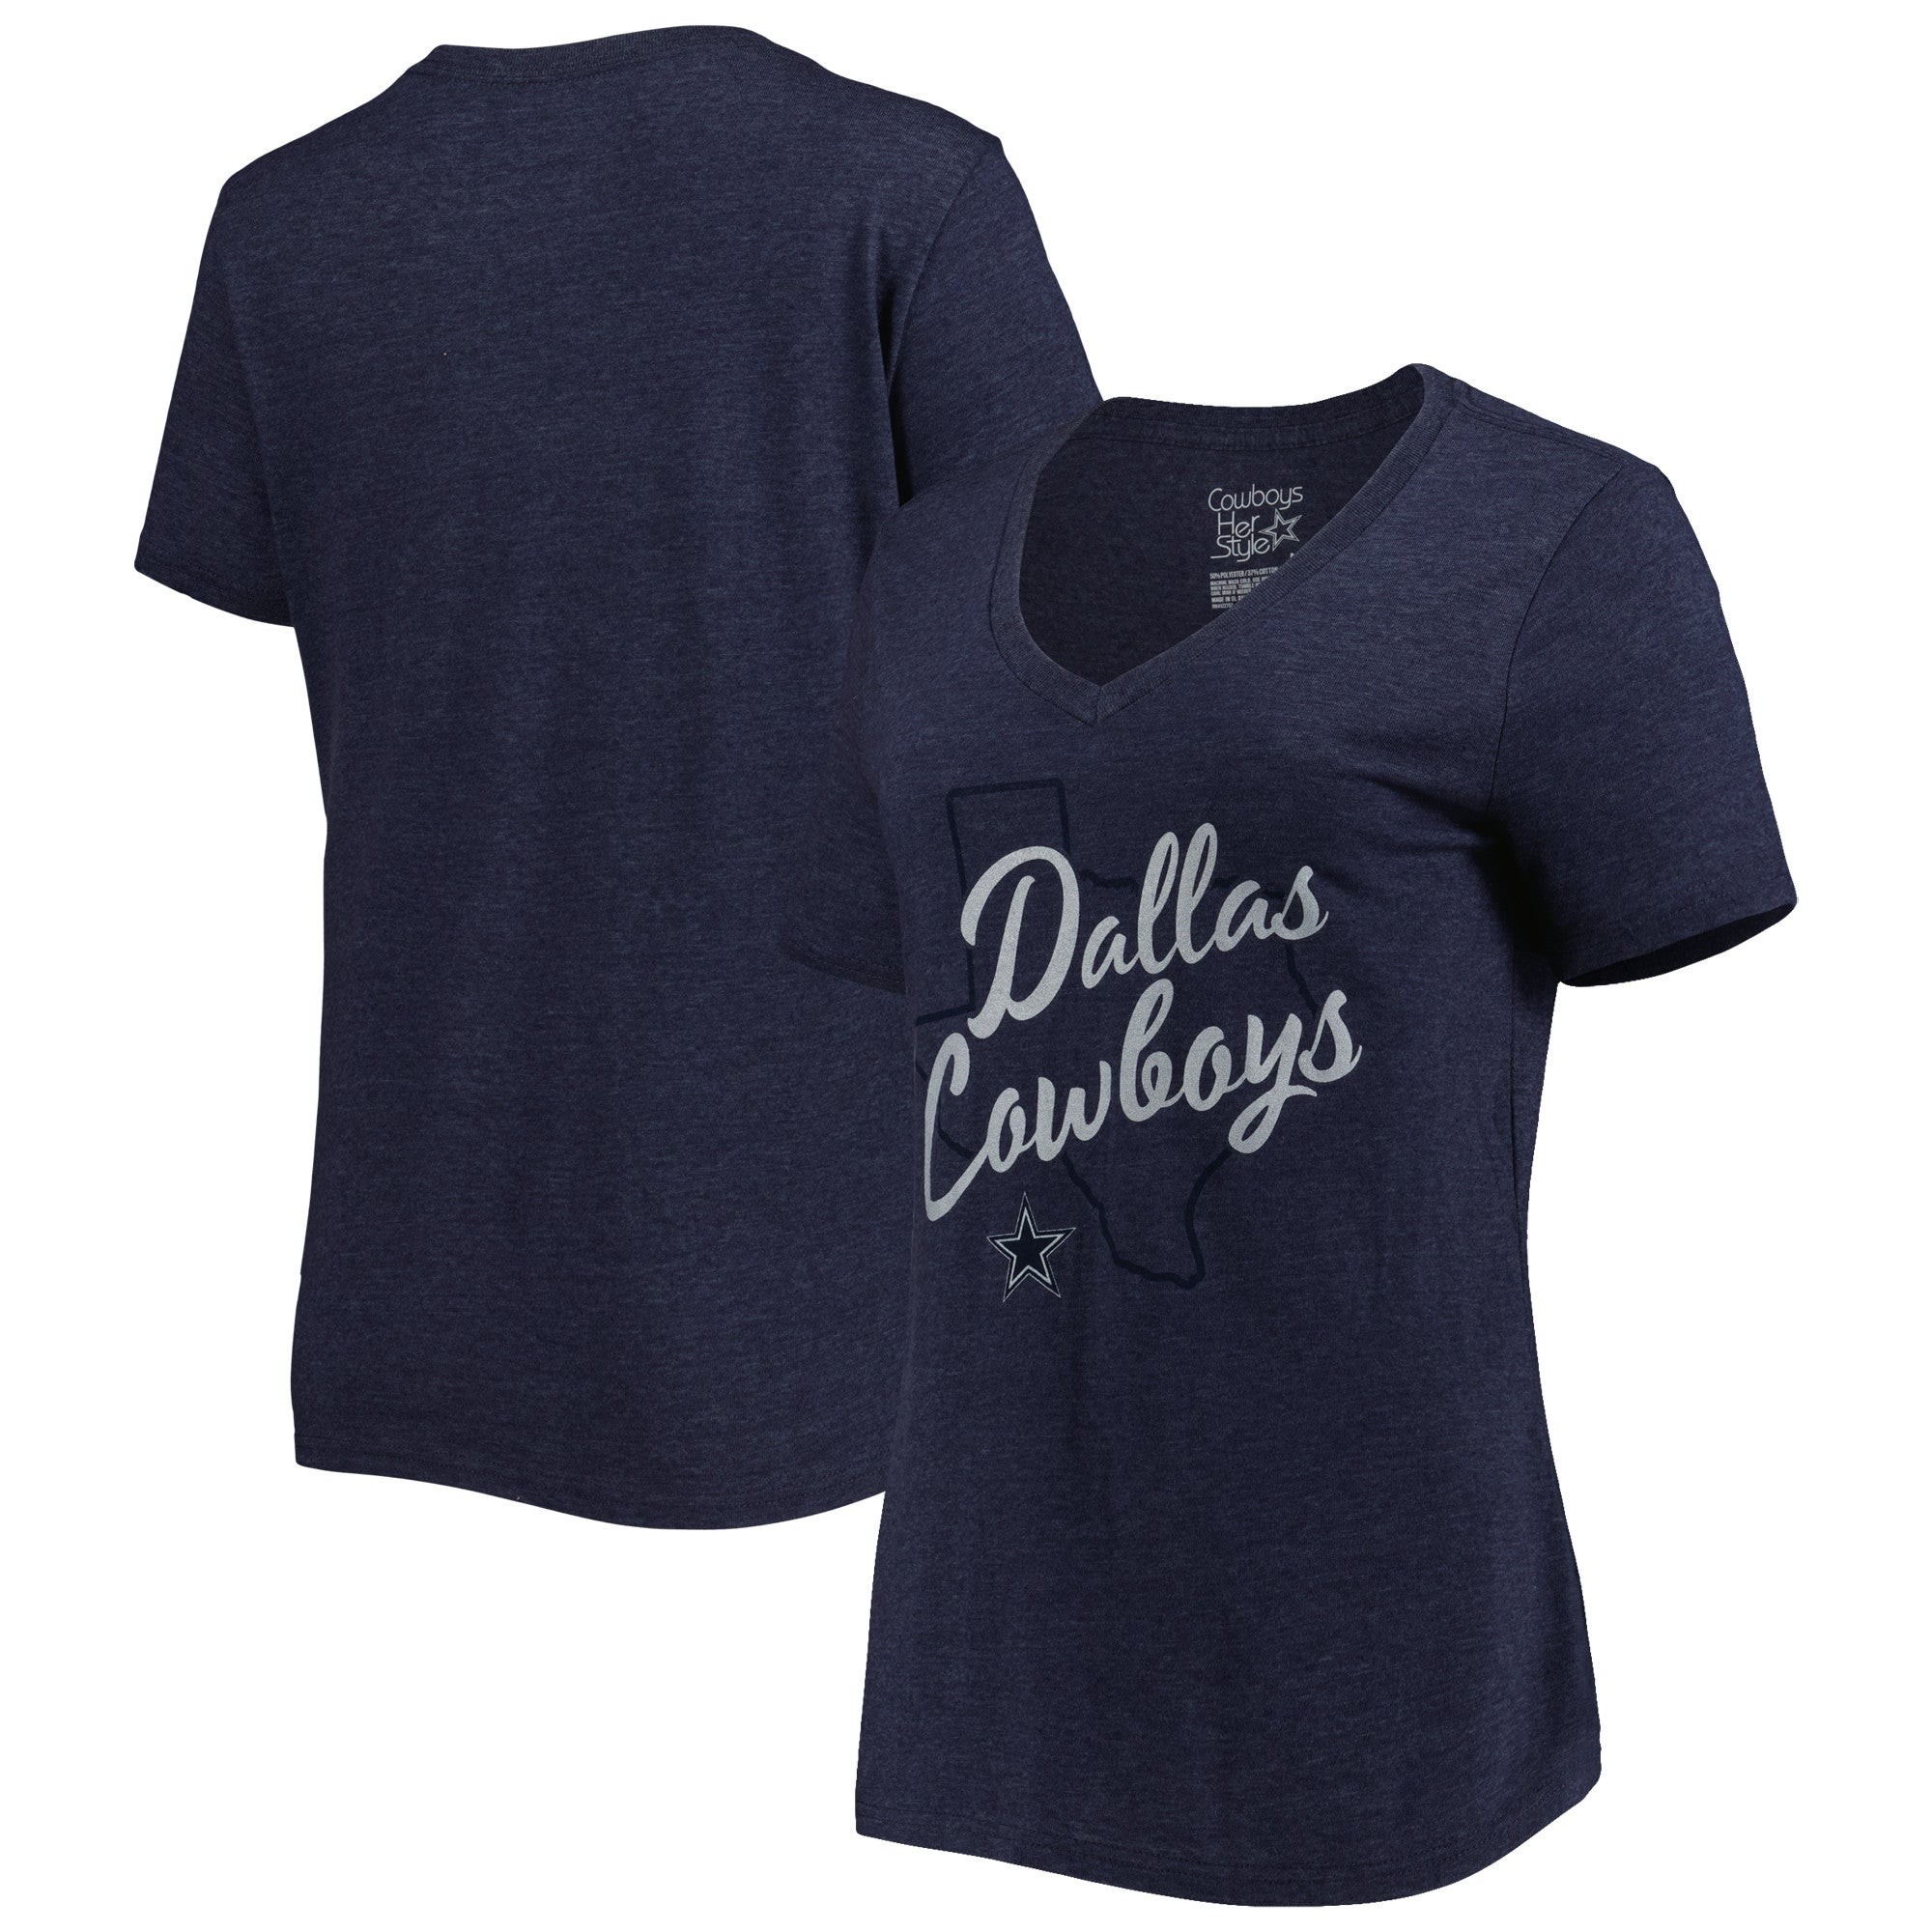 Dallas Cowboys Merchandise Antonia V-Neck T-Shirt - Women's